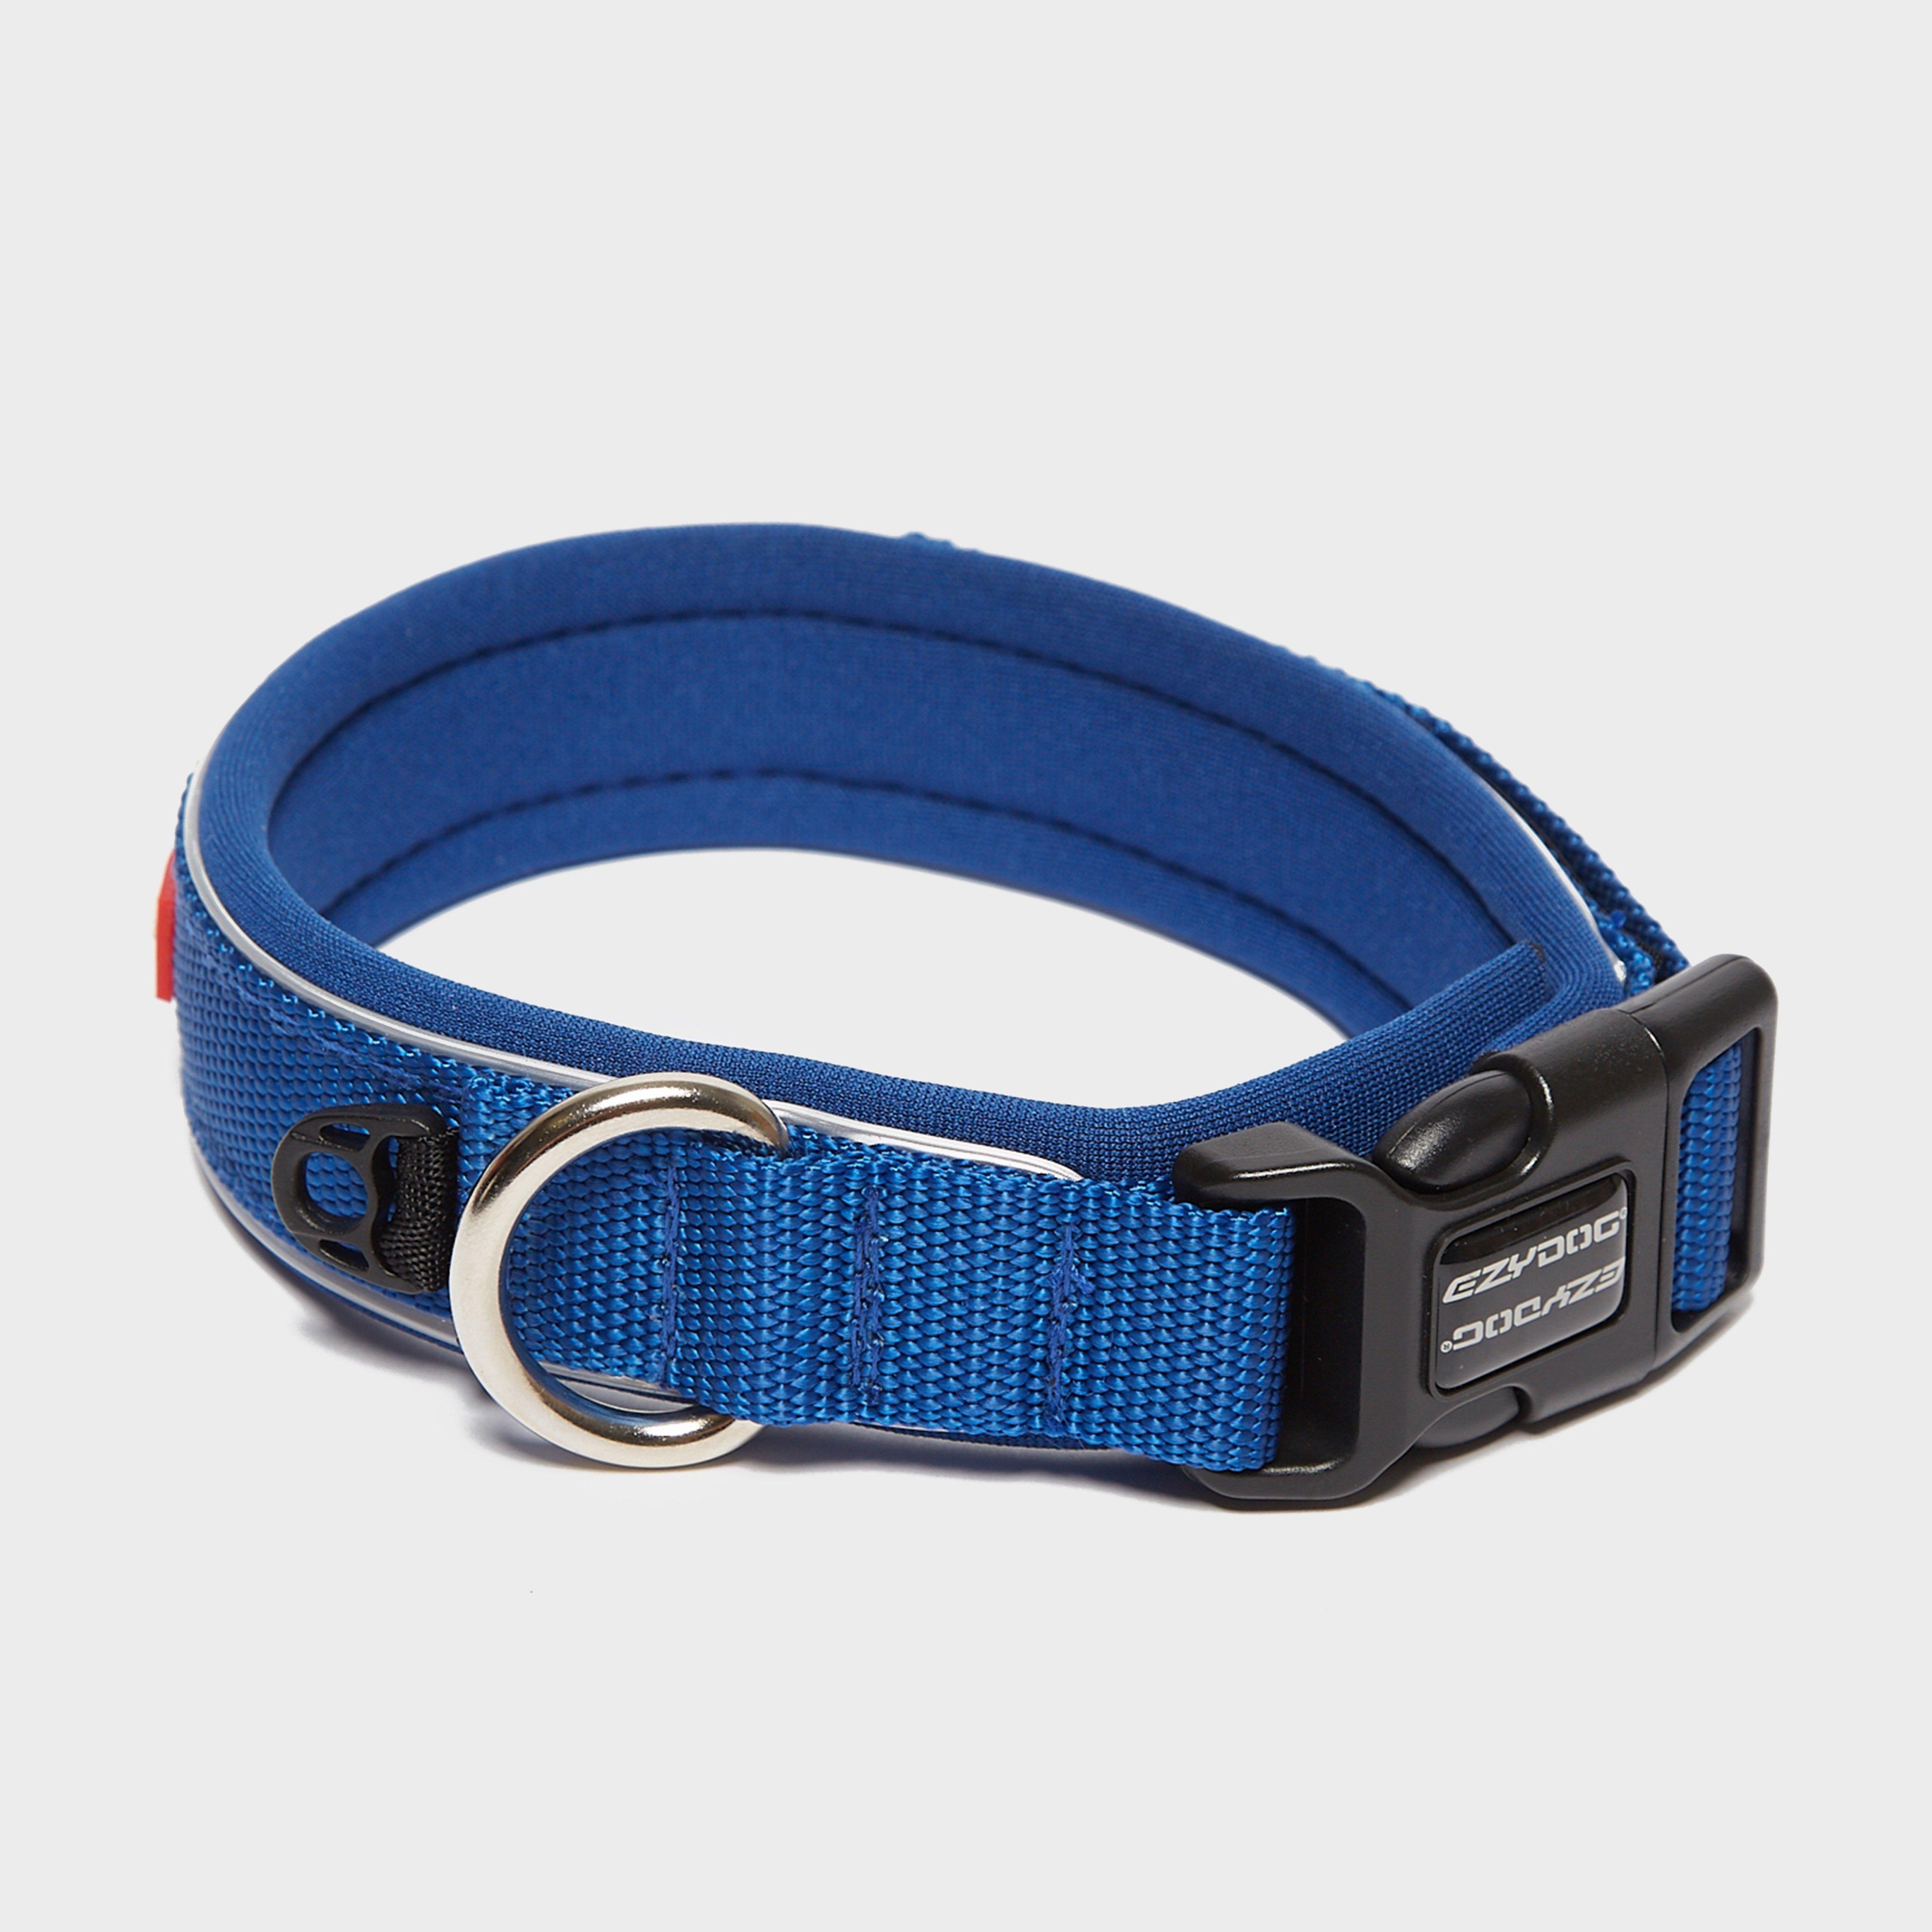 Ezy-dog Classic Neo Collar (medium) - Blue/mbl  Blue/mbl